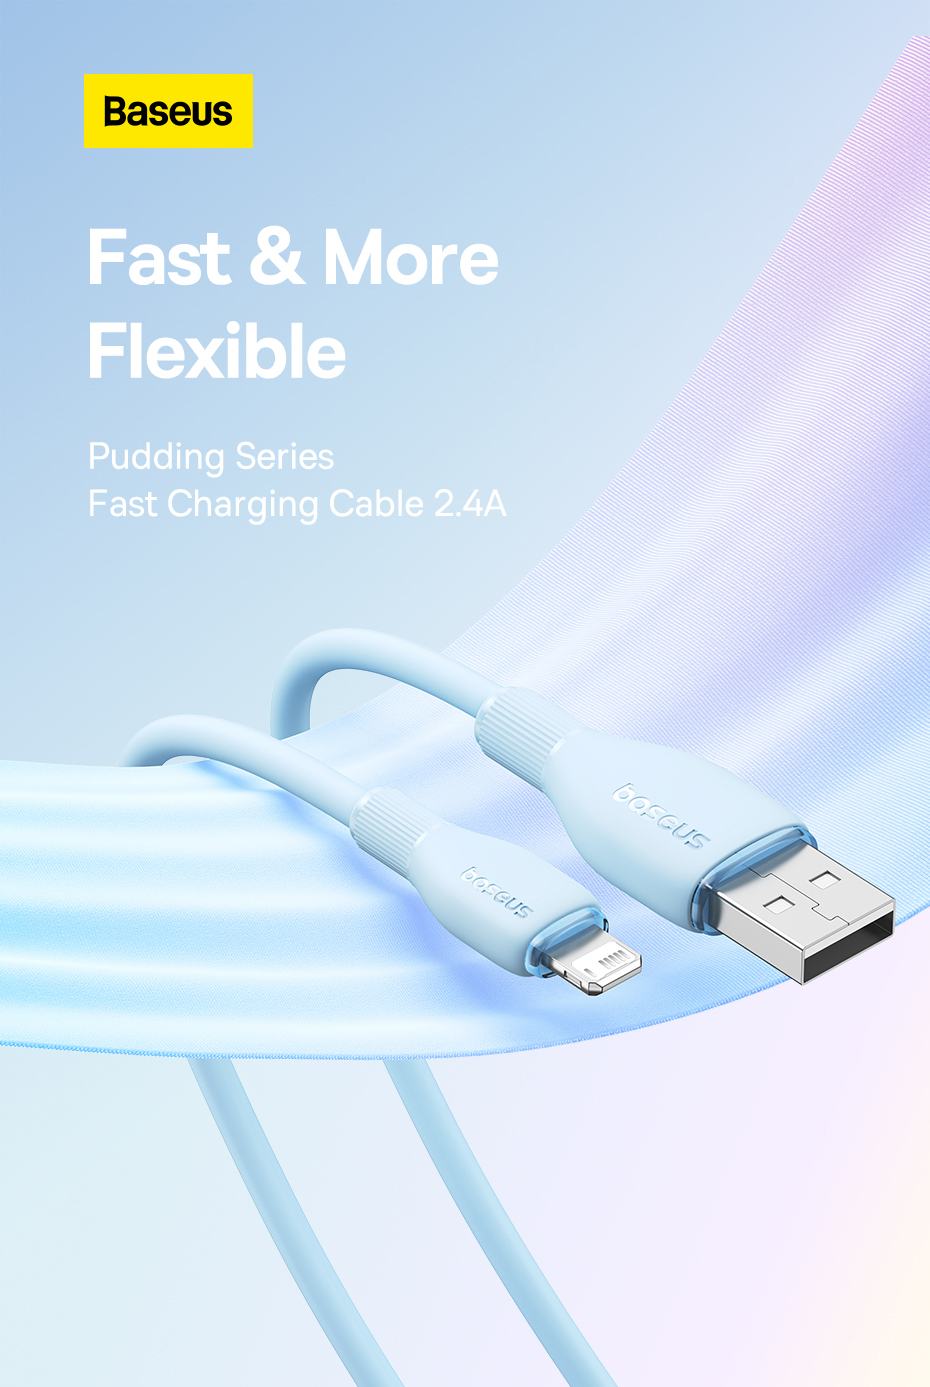 Cáp Sạc Nhanh Cho iPhone iPad Baseus Pudding Series USB to Lightning 2.4A ( Fast Charging Data Cable 120cm) (20)